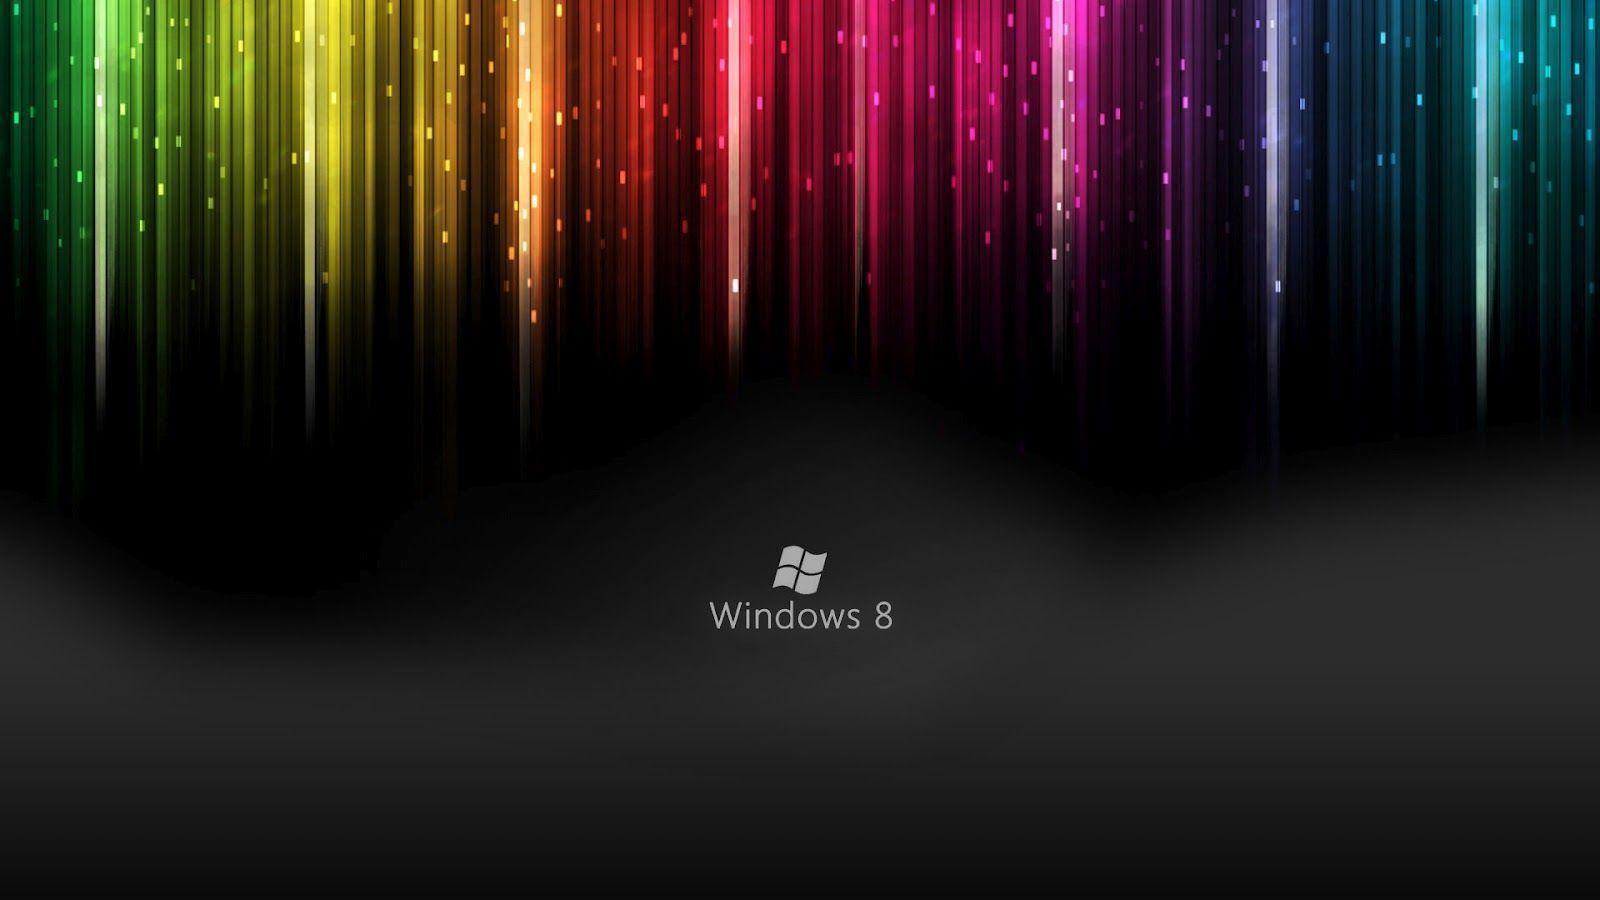 Hd Wallpaper Of Windows 8. Free Download Wallpaper